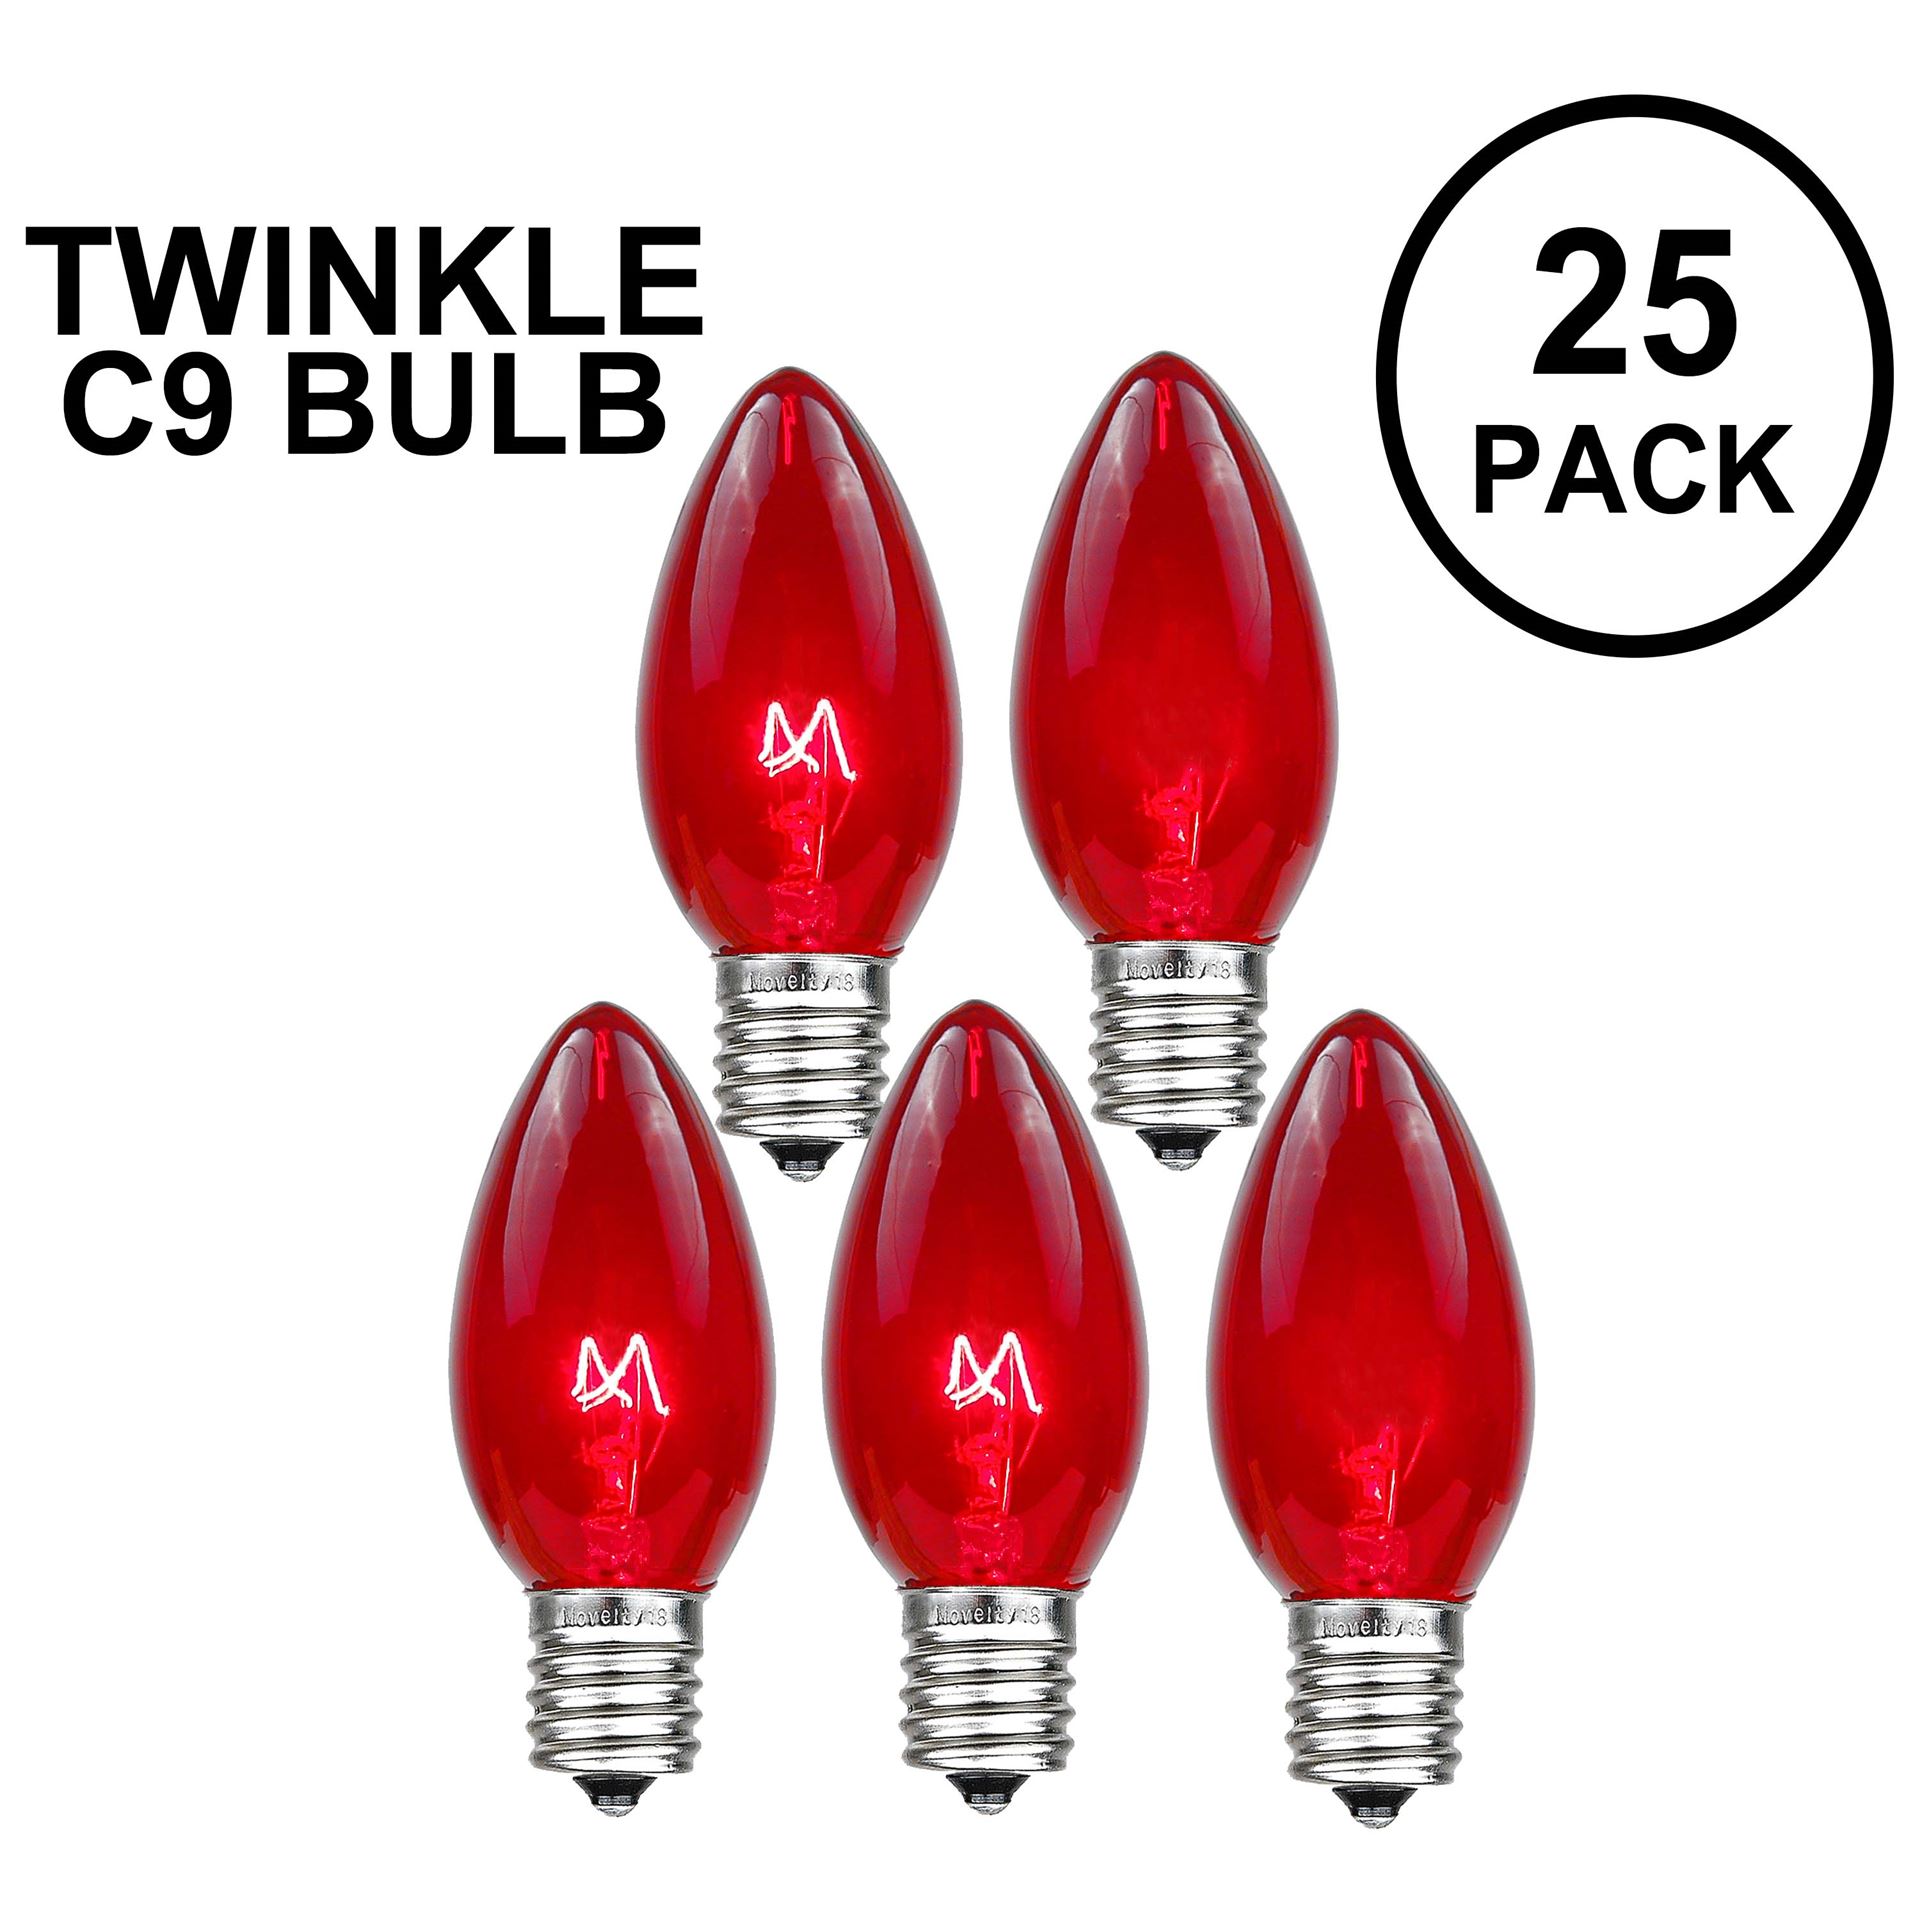 C-7 MULTI-COLOR CERAMIC TWINKLE BULBS NEW 1 BOX OF 25 C7 BLINK CHRISTMAS LIGHTS 